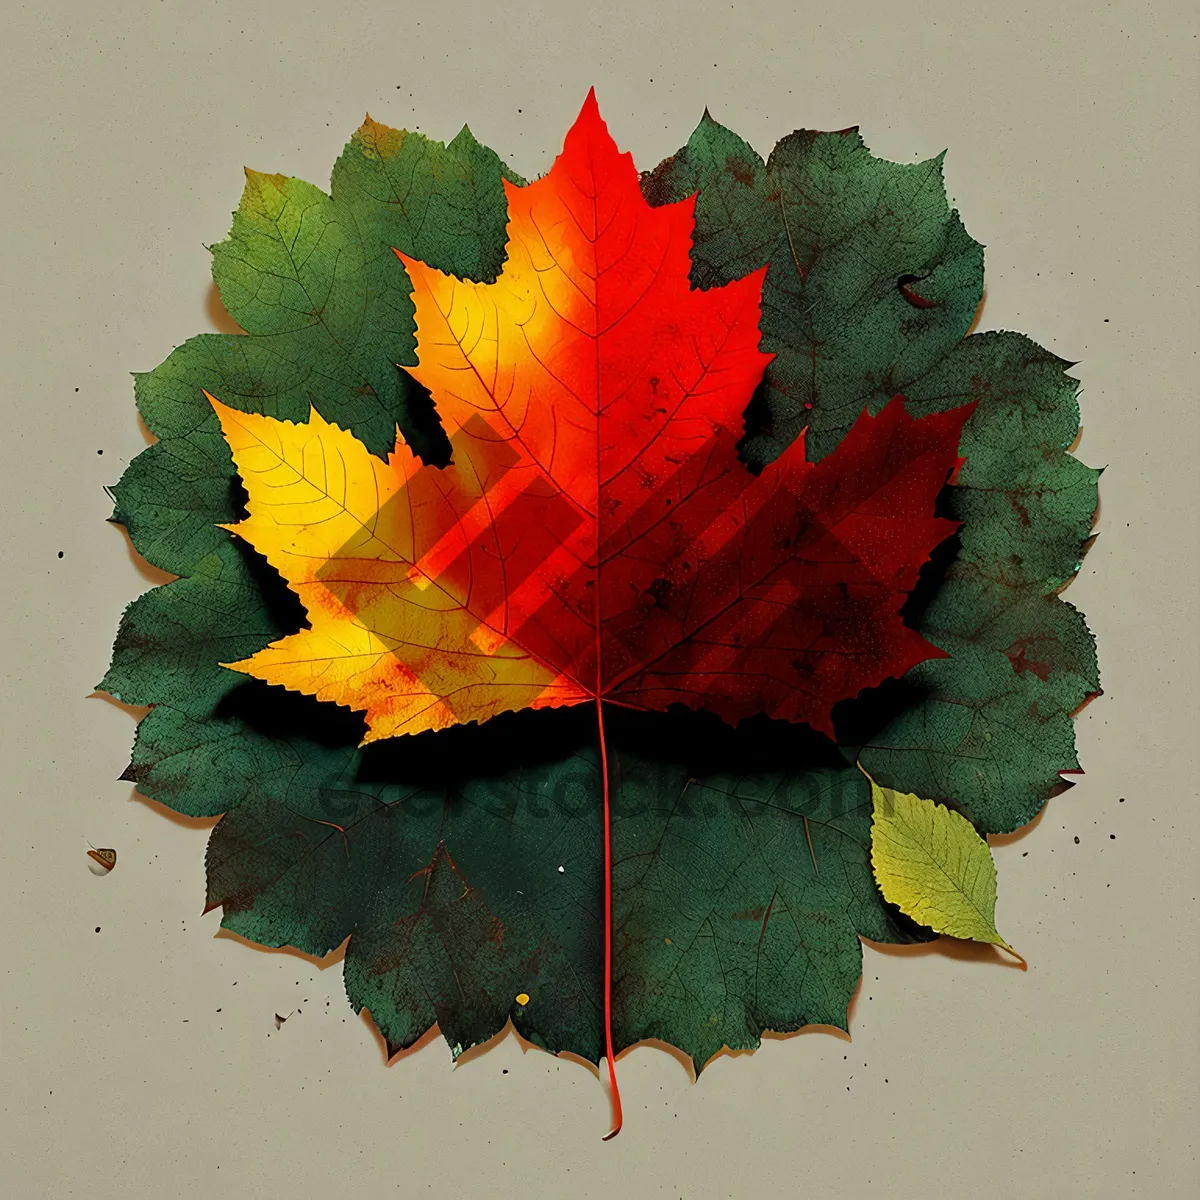 Picture of Vibrant Fall Maple Leaf - Natural Autumn Foliage